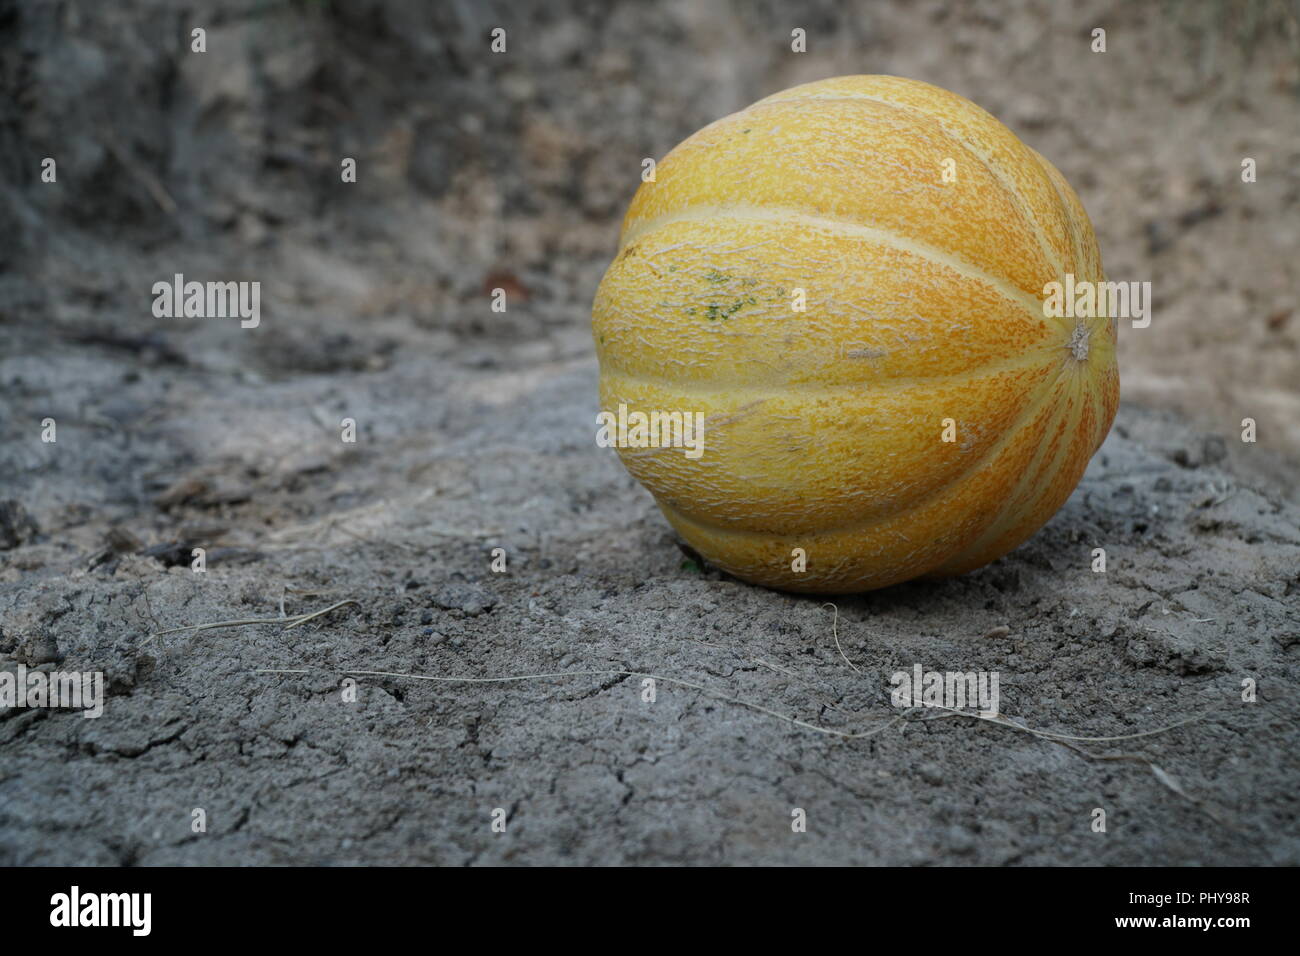 Yellow melon on dry cracked soil Stock Photo